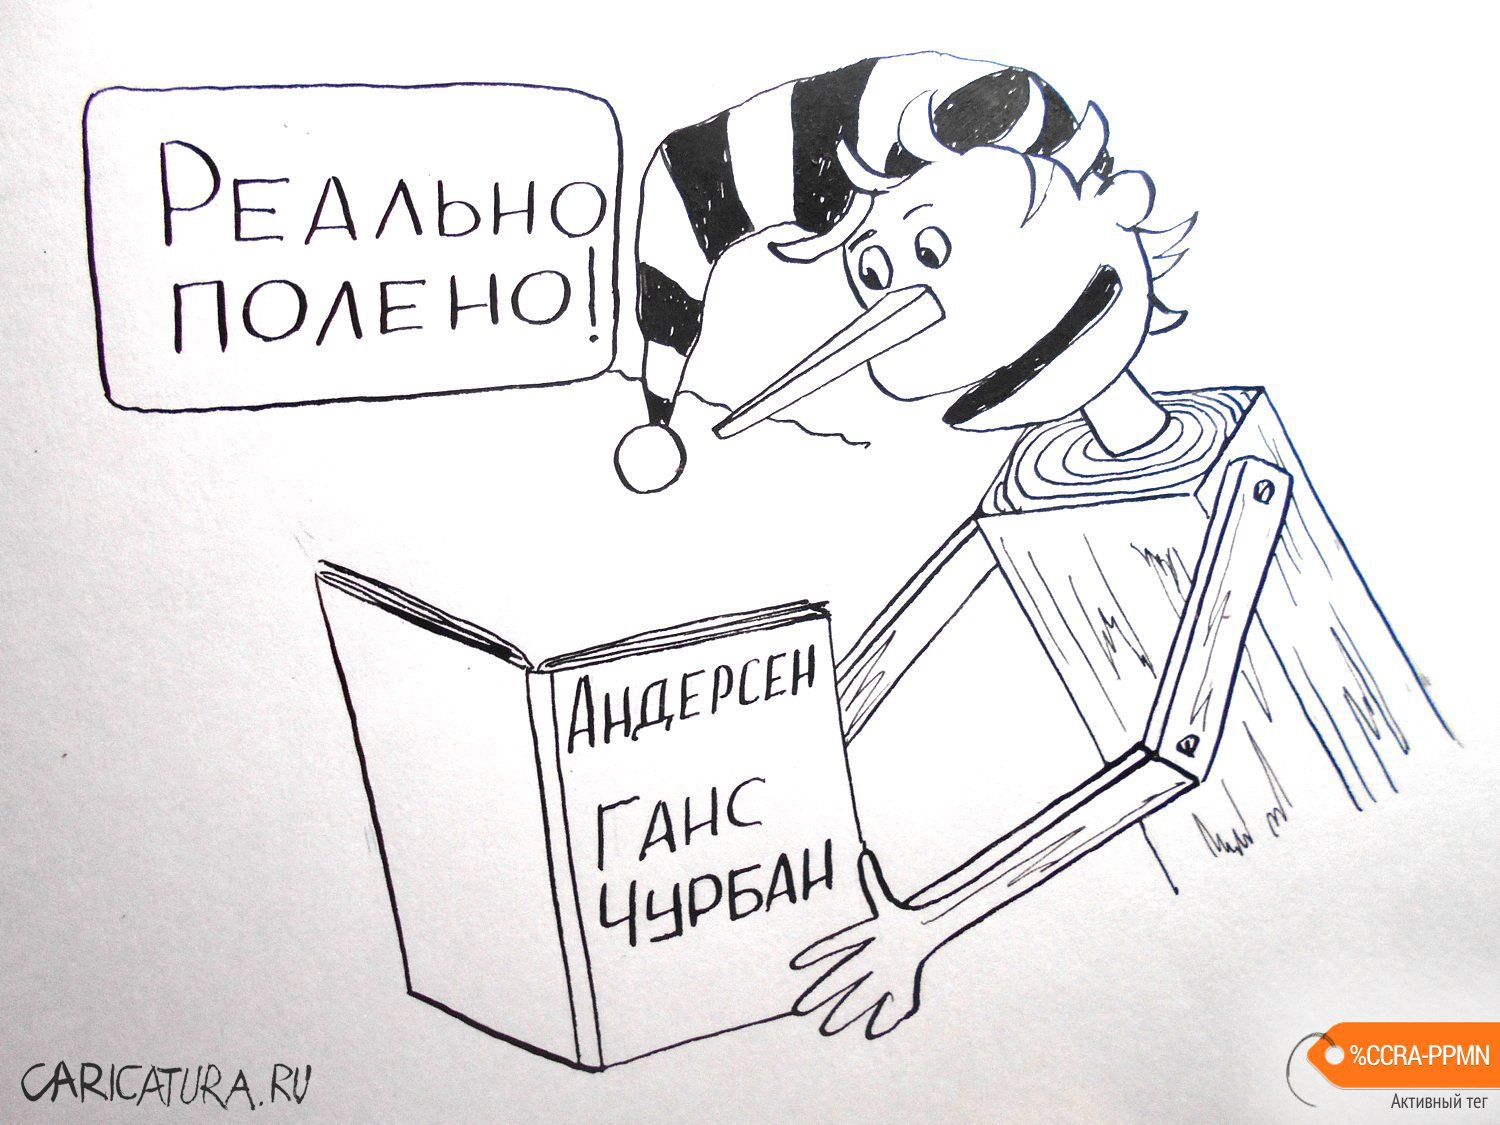 Карикатура "Буратино", Александр Петров